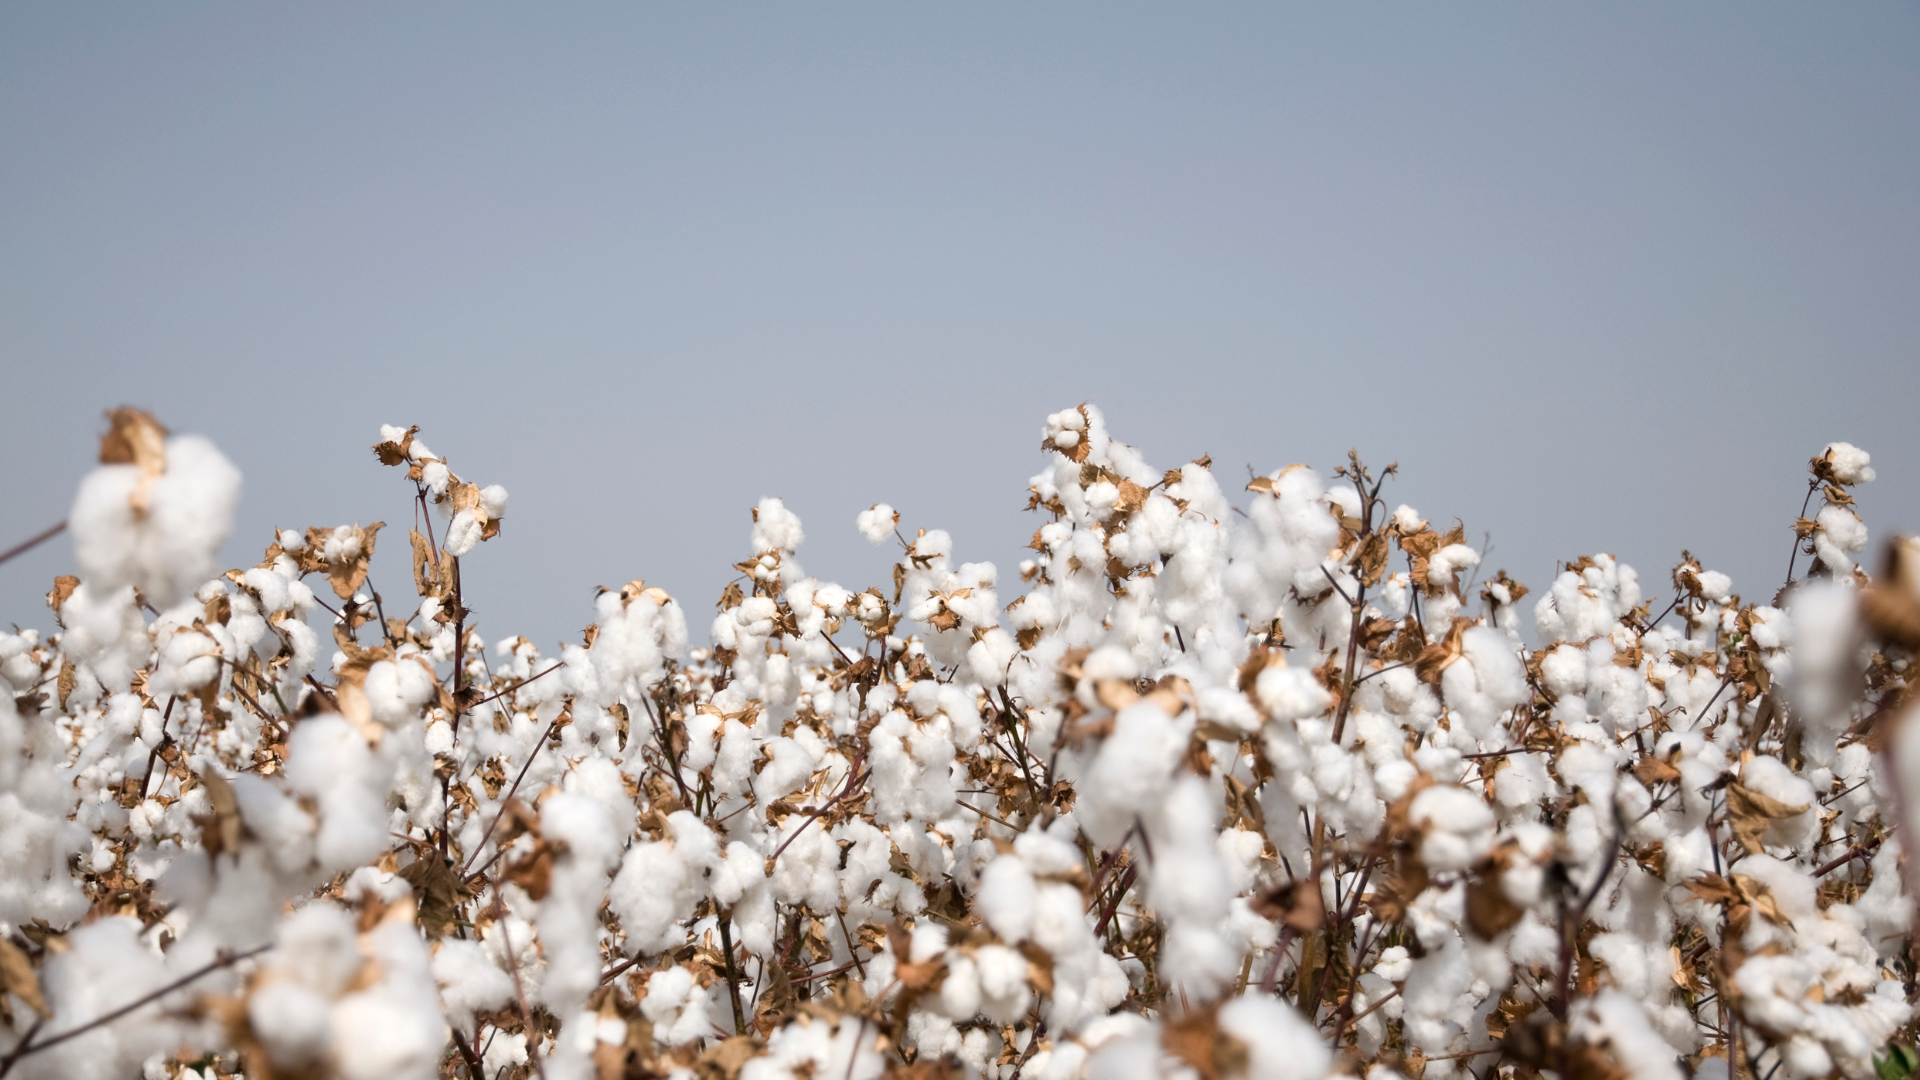 Organic Cotton- Benefits, Uses & Production